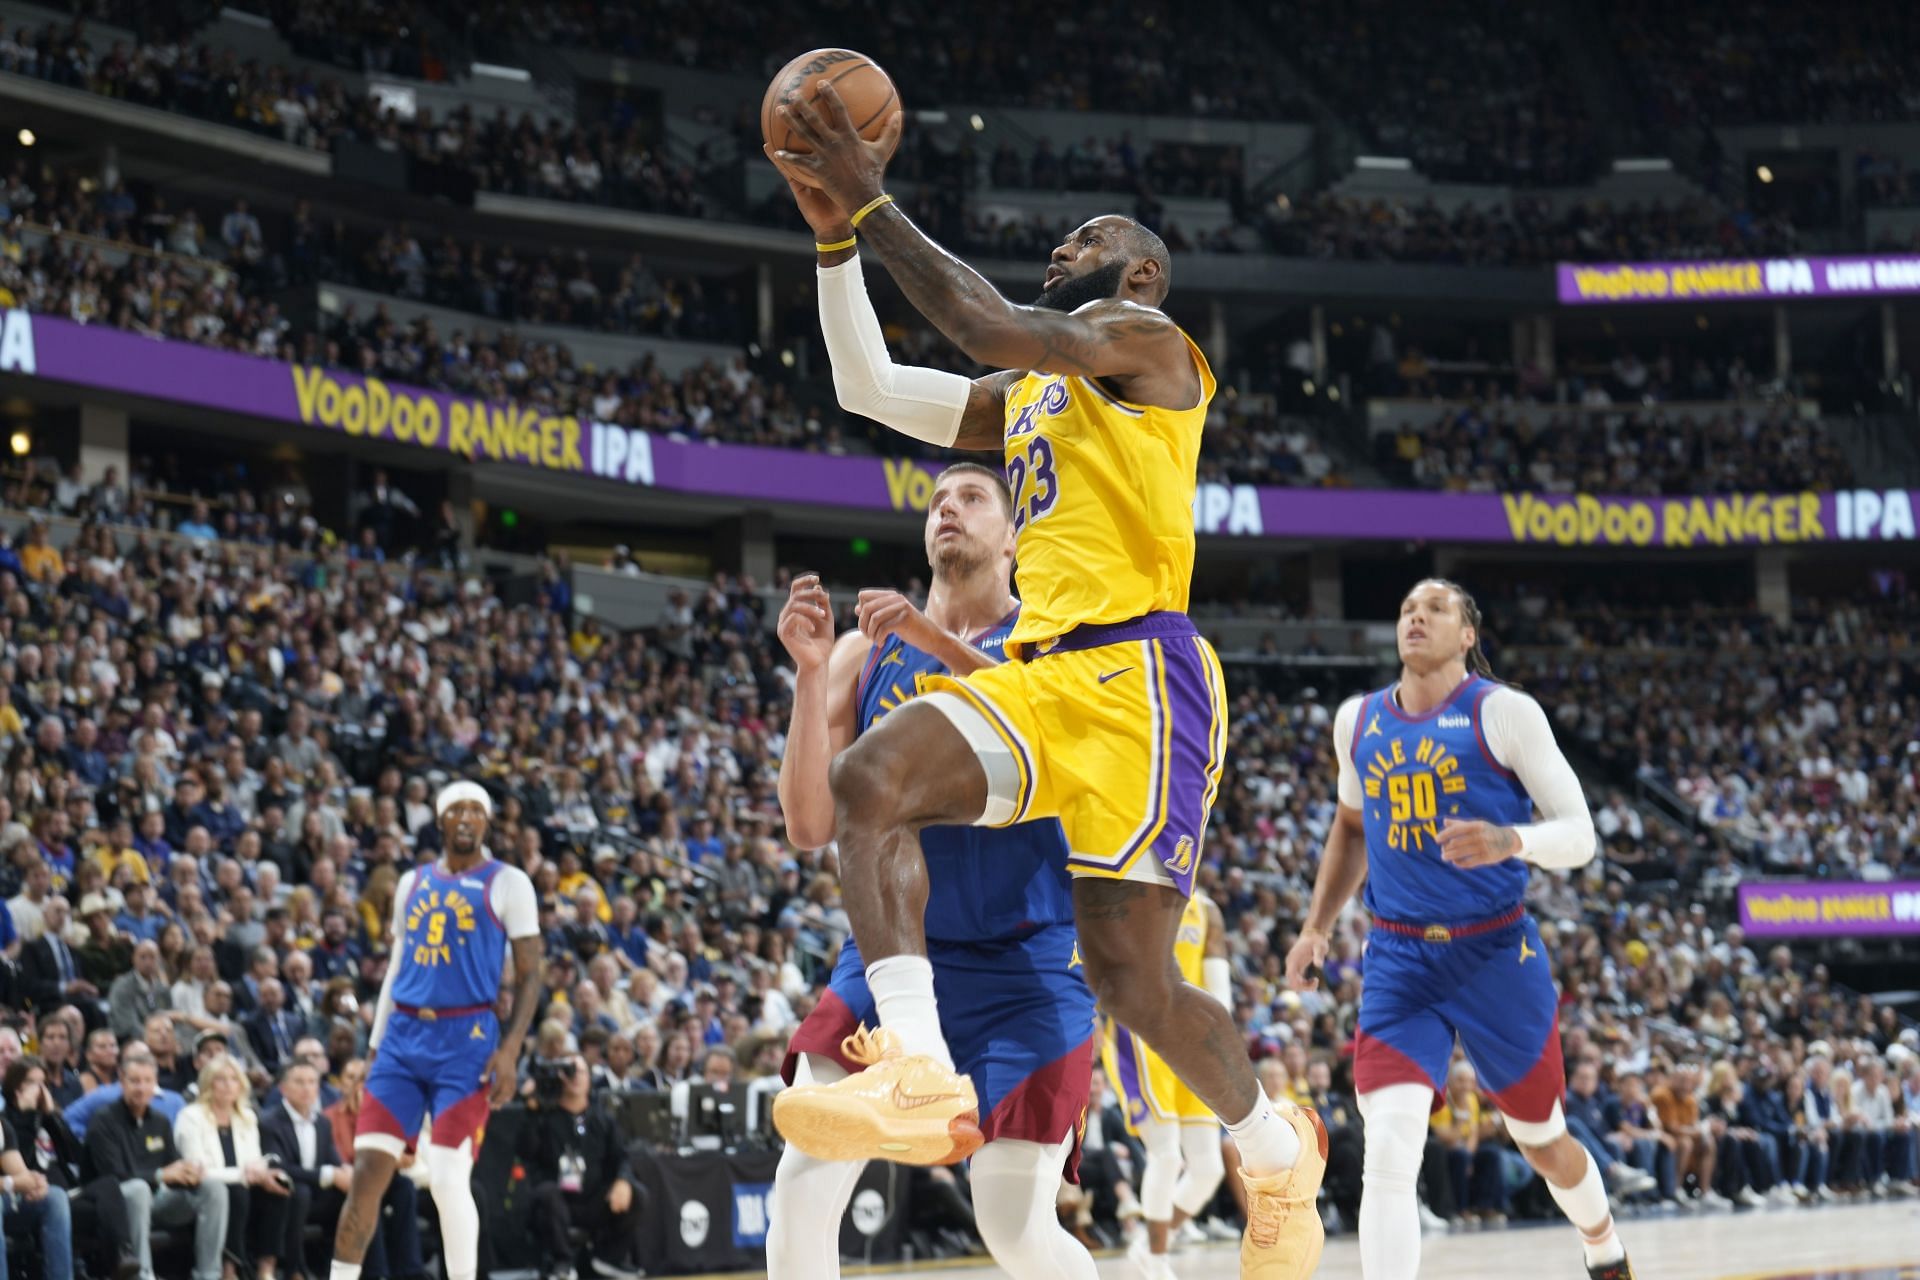 LA Lakers superstar forward LeBron James